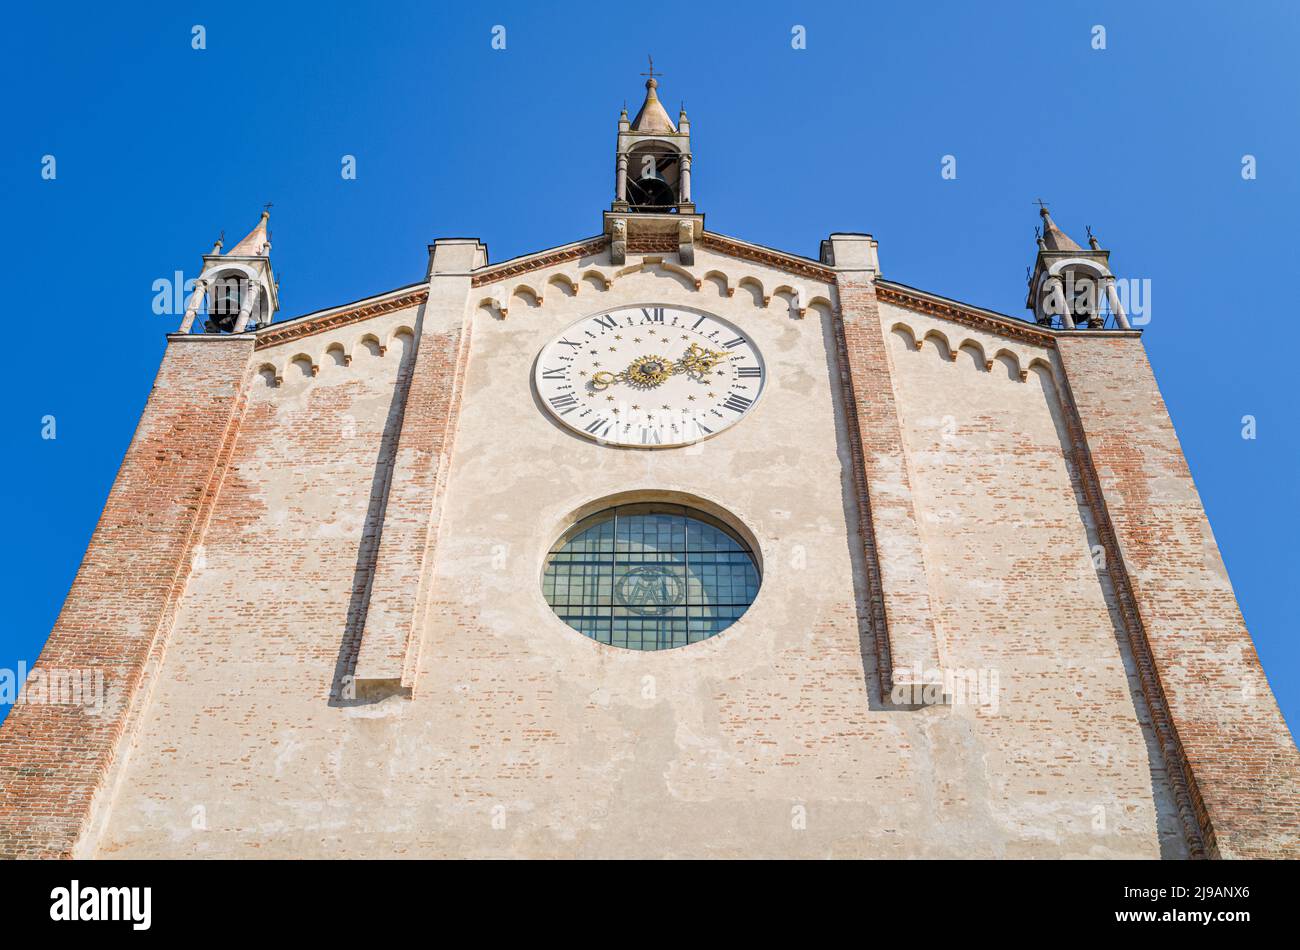 Italy, Montagnana, upward view of the facade of the cathedral of Santa Maria Assunta Stock Photo